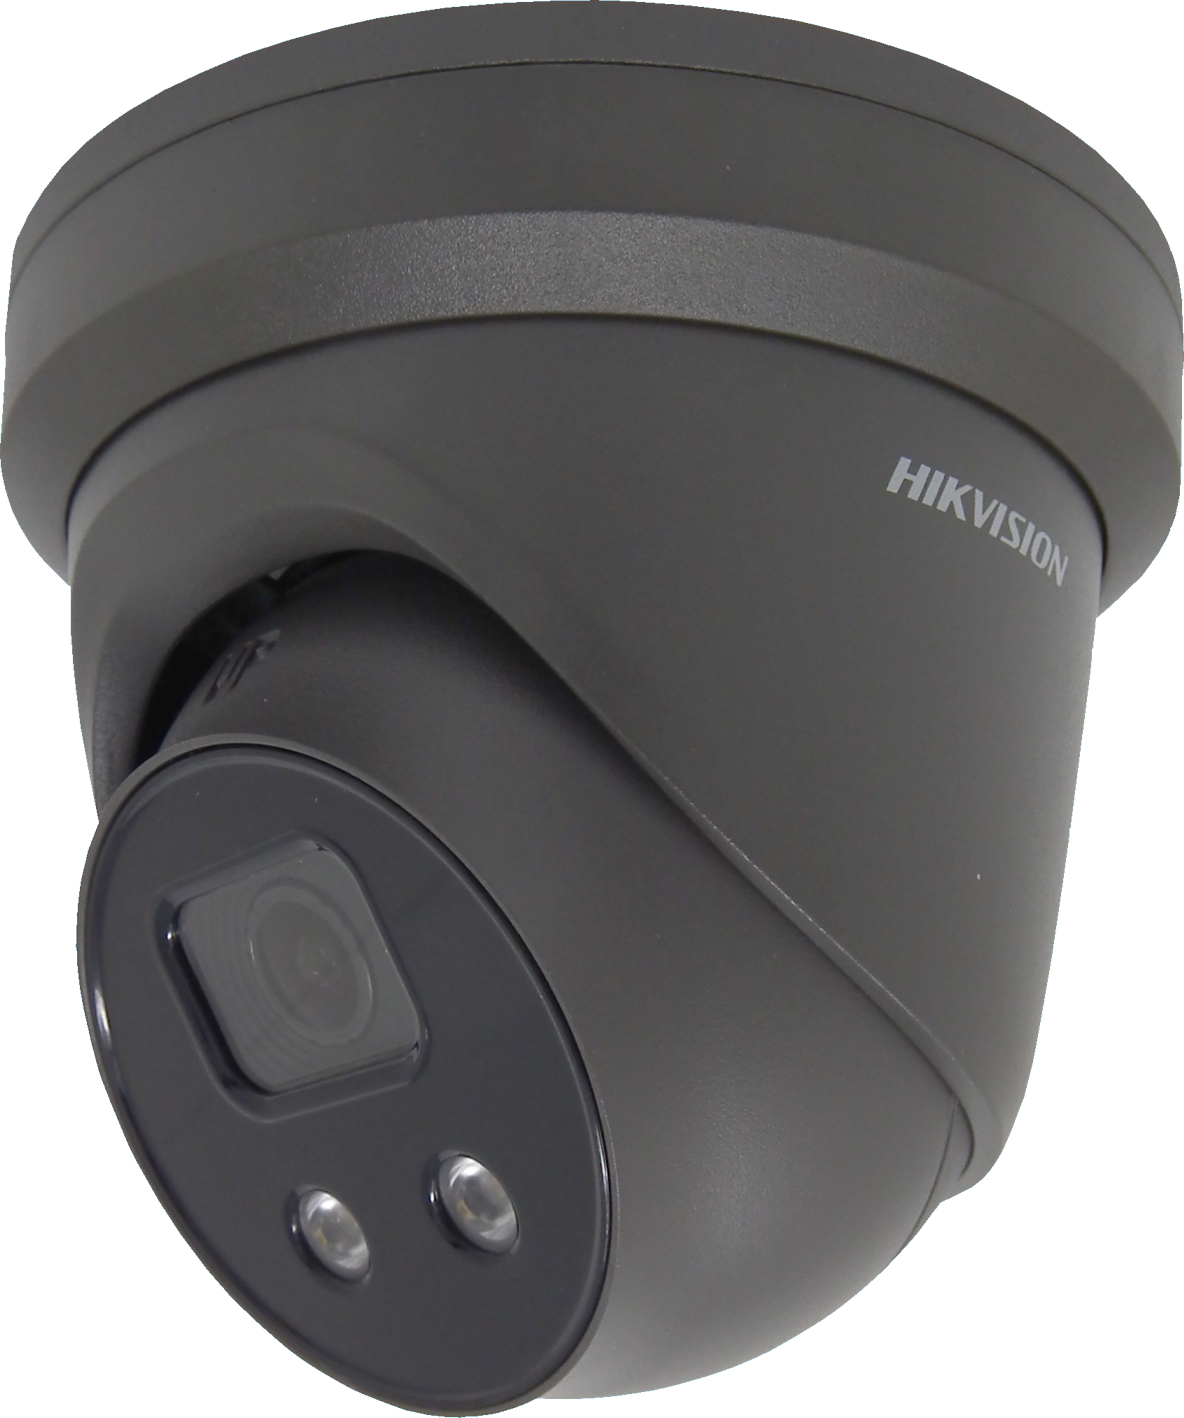 20000890 Hikvision AcuSense EasyIP 4.0 4MP EXIR Turret IP camera, 2.8mm, ingebouwde microfoon, zwart